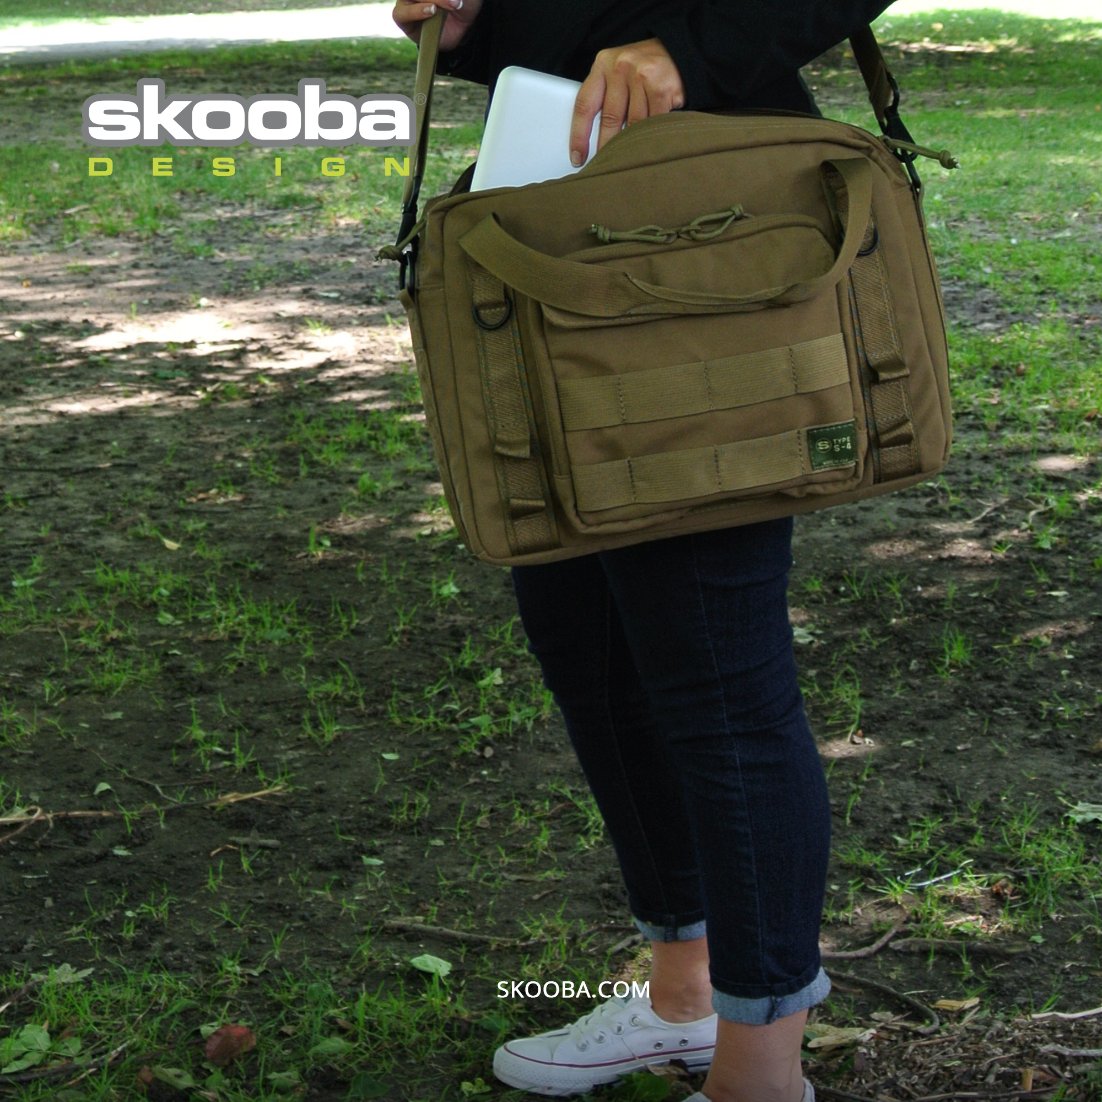 Hotdog Hd101 Skooba Design Yoga Mat Carrying Gym Bag Case Rollpack Onyx |  eBay